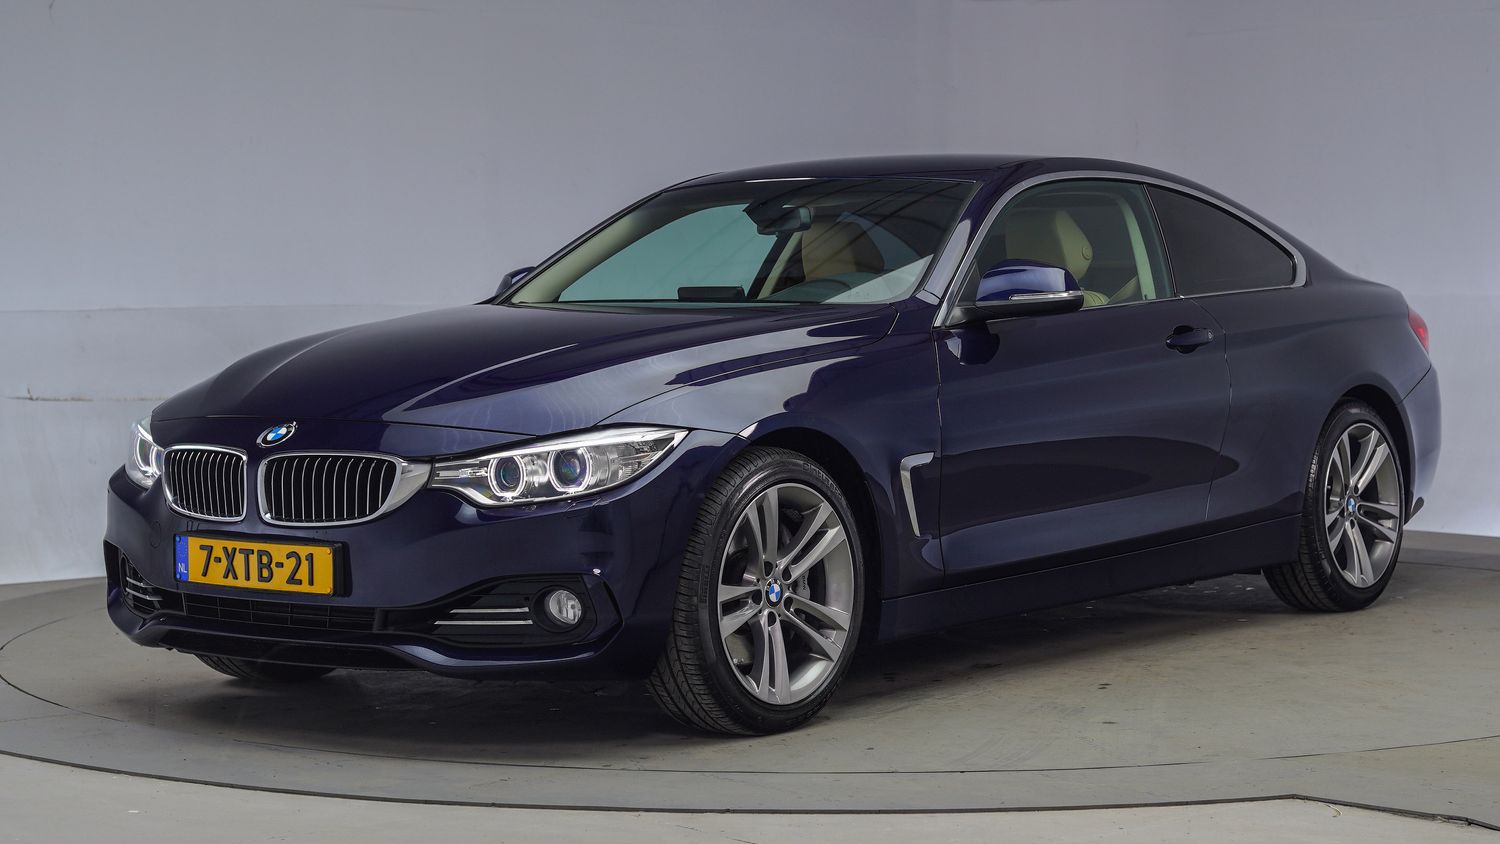 BMW 4-serie Coupé 2014 7-XTB-21 1